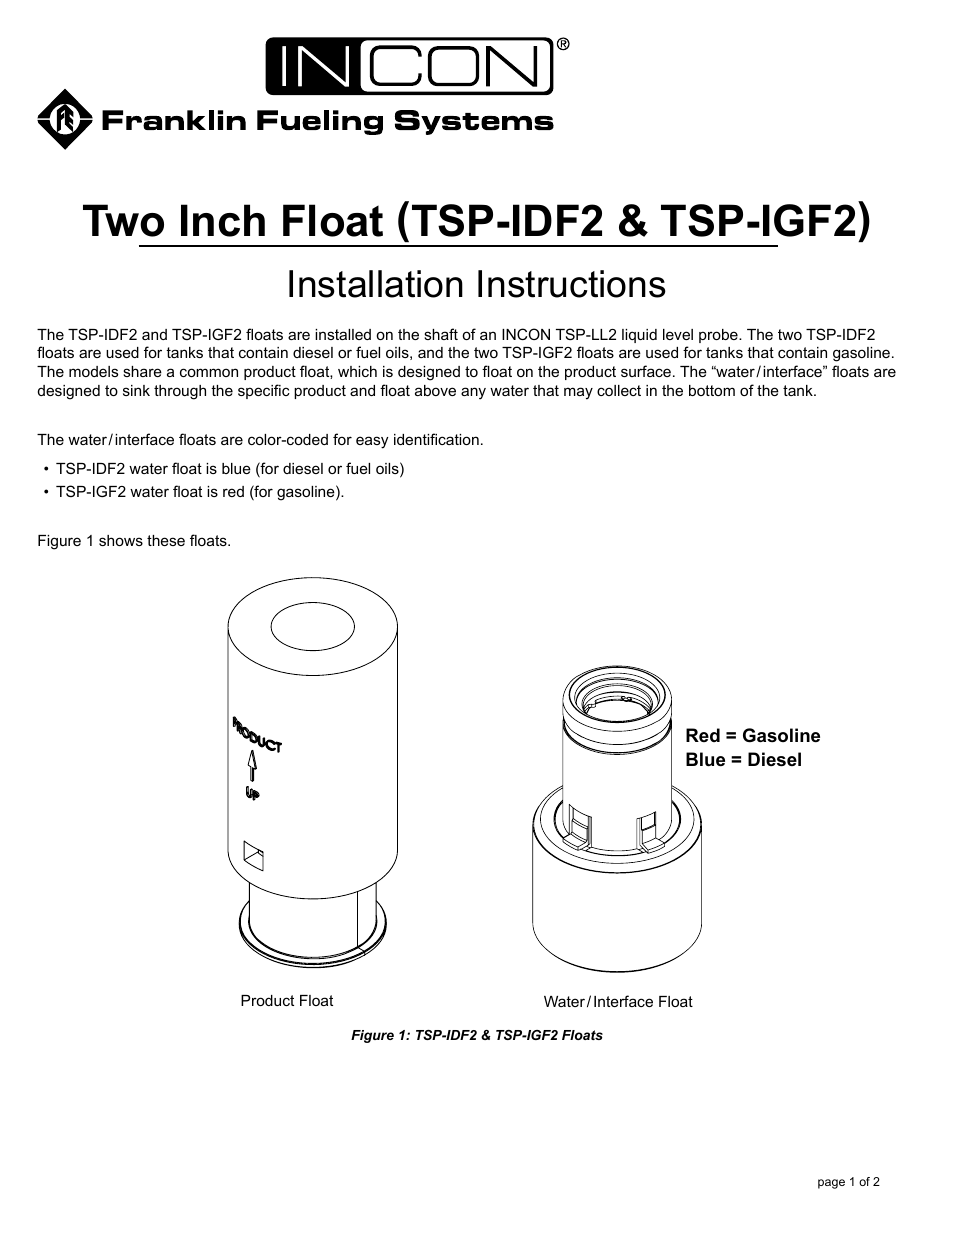 TSP-IDF2 Two Inch Floats